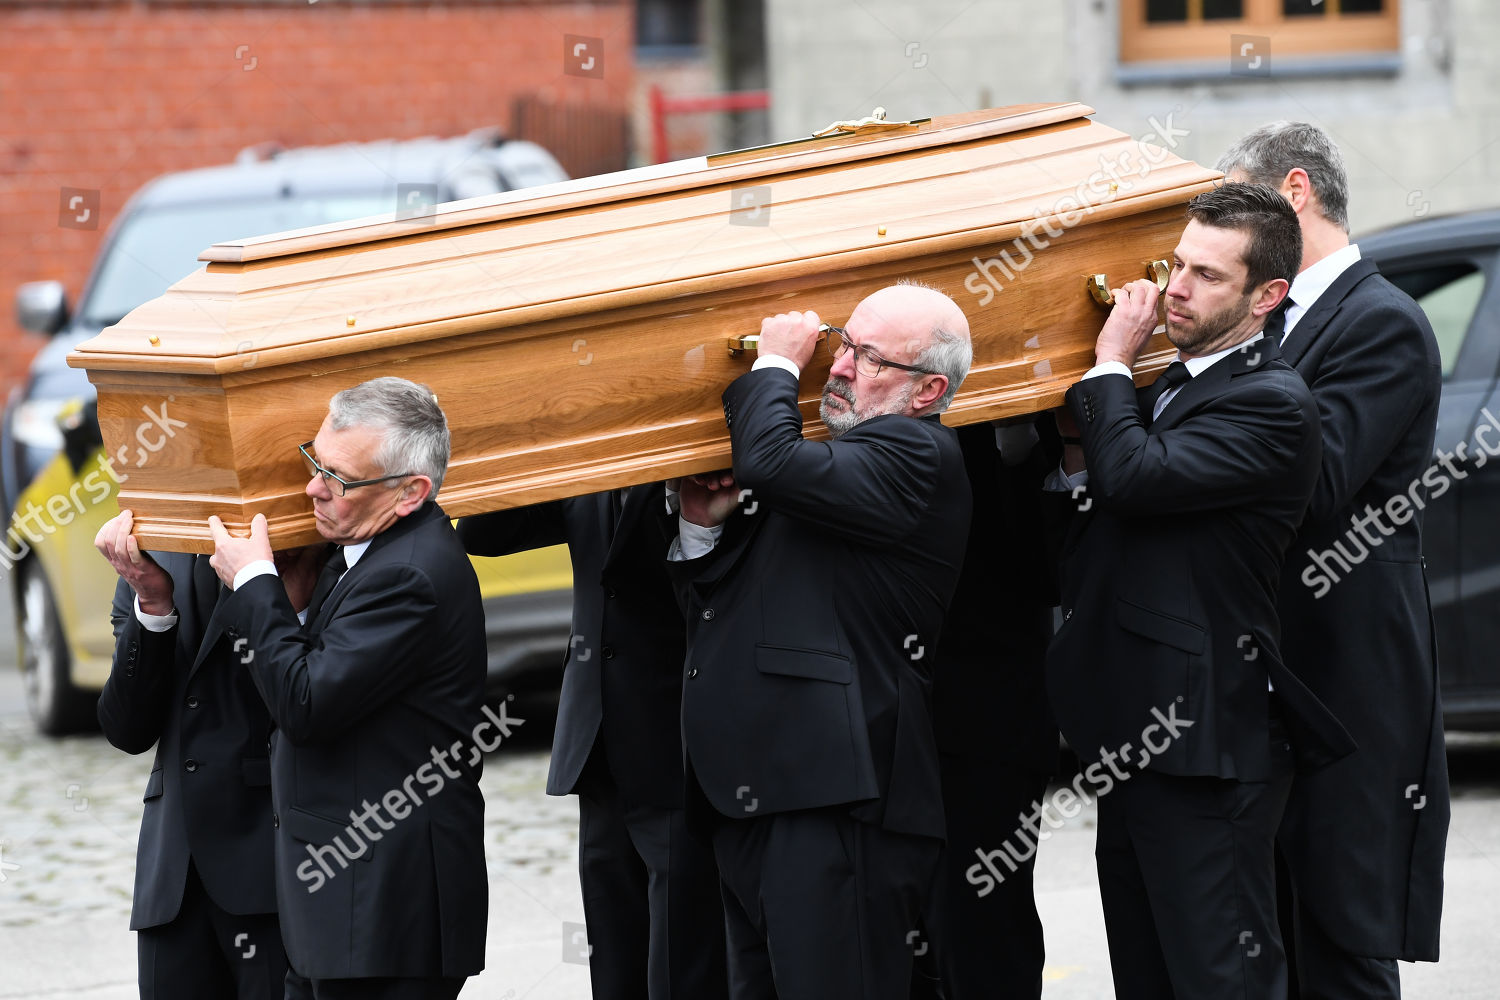 funeral-of-philippe-de-lannoy-anvaing-belgium-shutterstock-editorial-10063926m.jpg